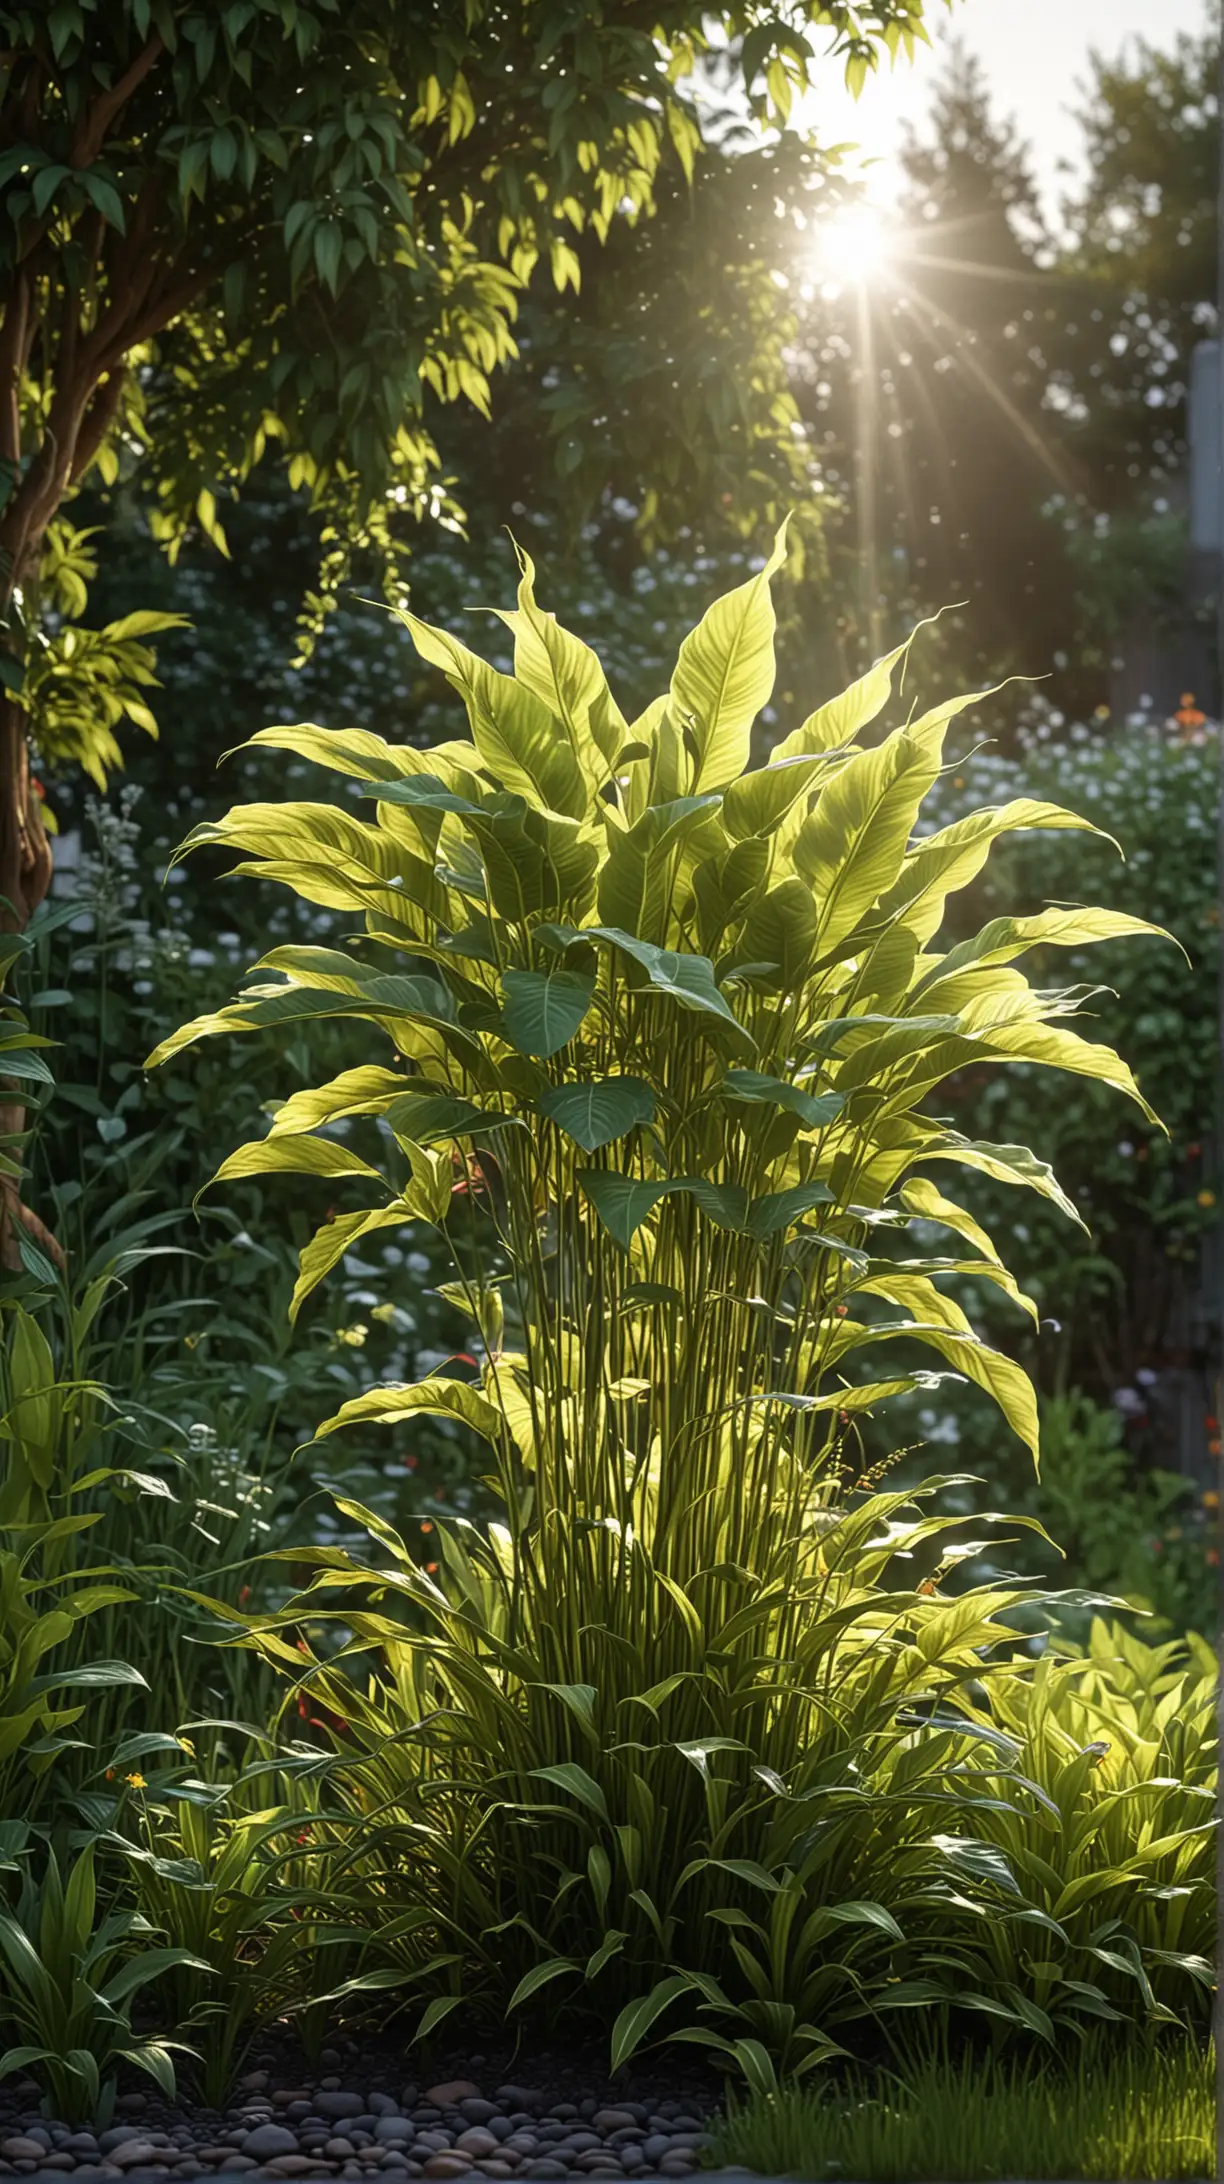 Vibrant Morning Garden with Radiant Light HyperRealistic 4K HDR Image